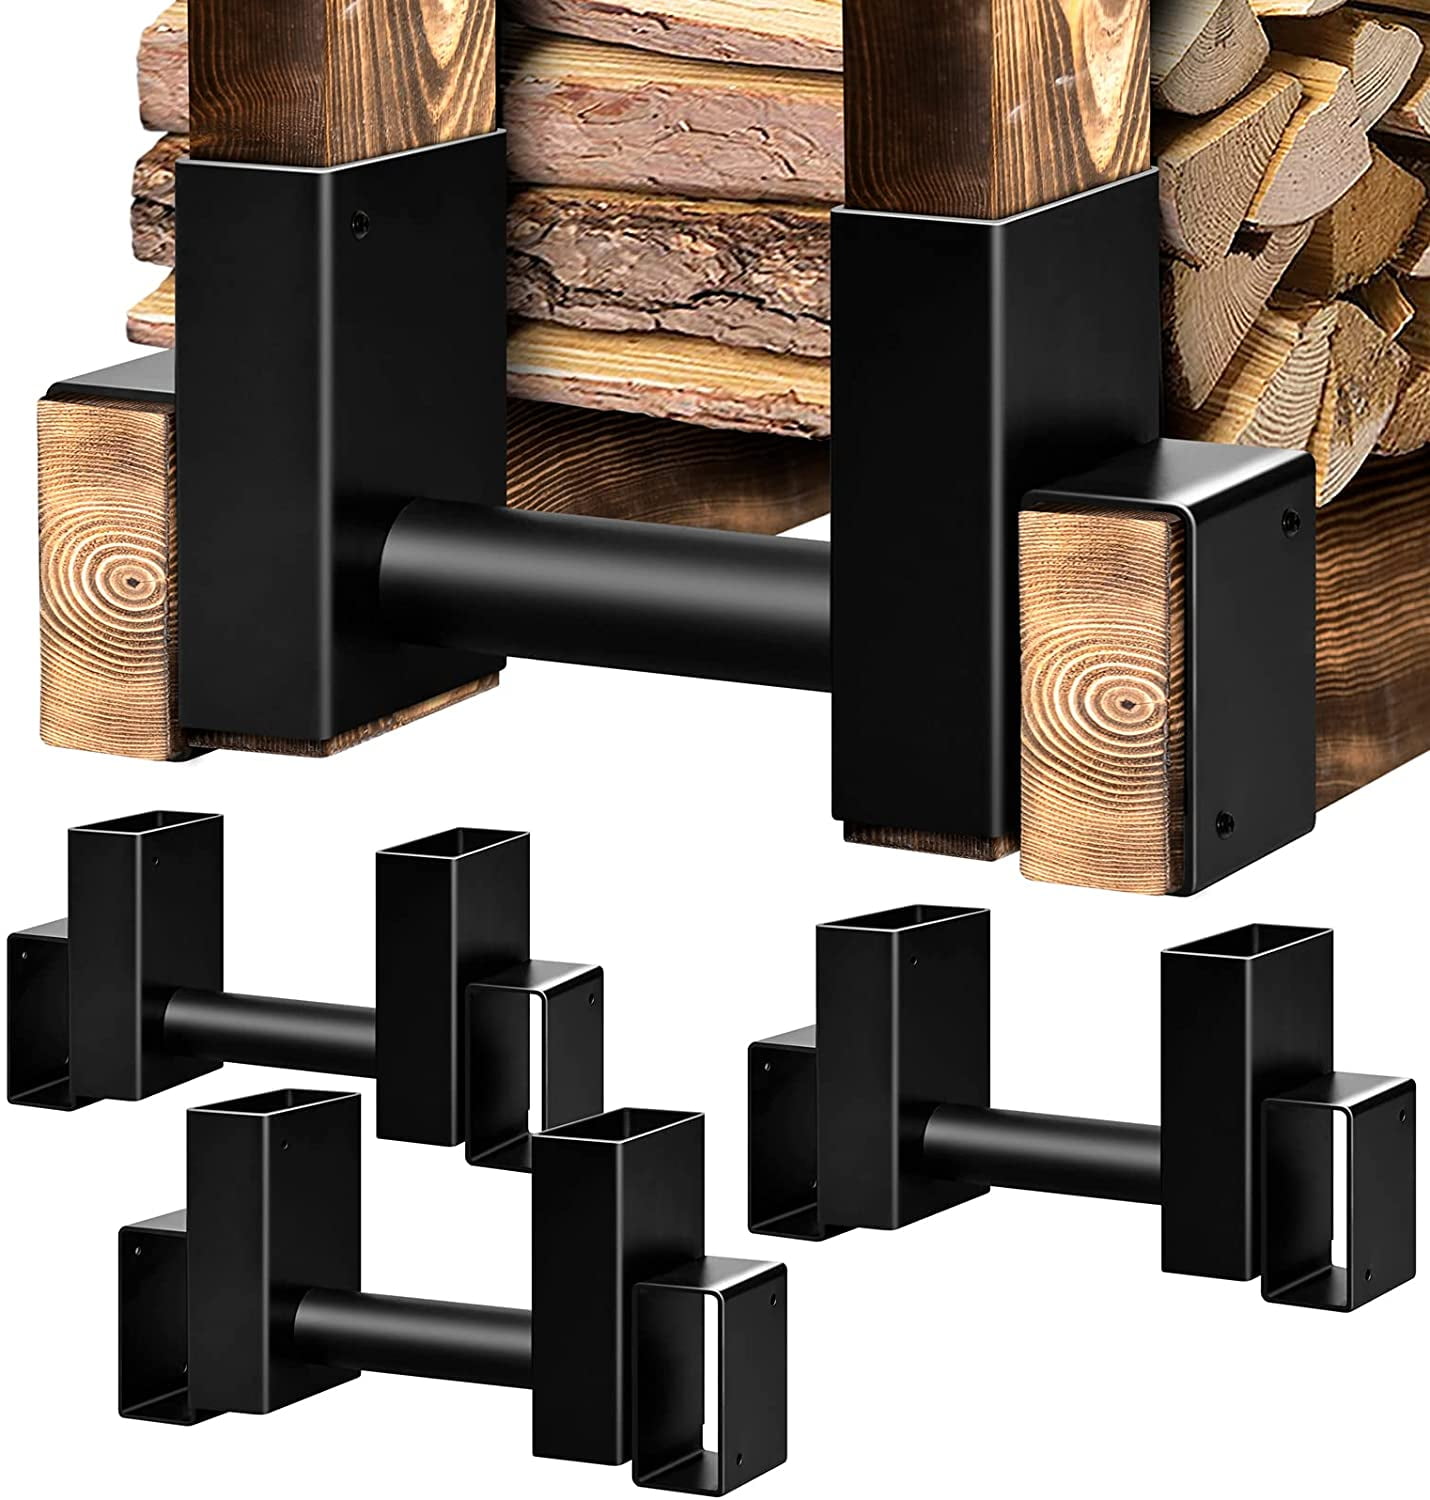  Artibear Depth Adjustable Firewood Rack Brackets for